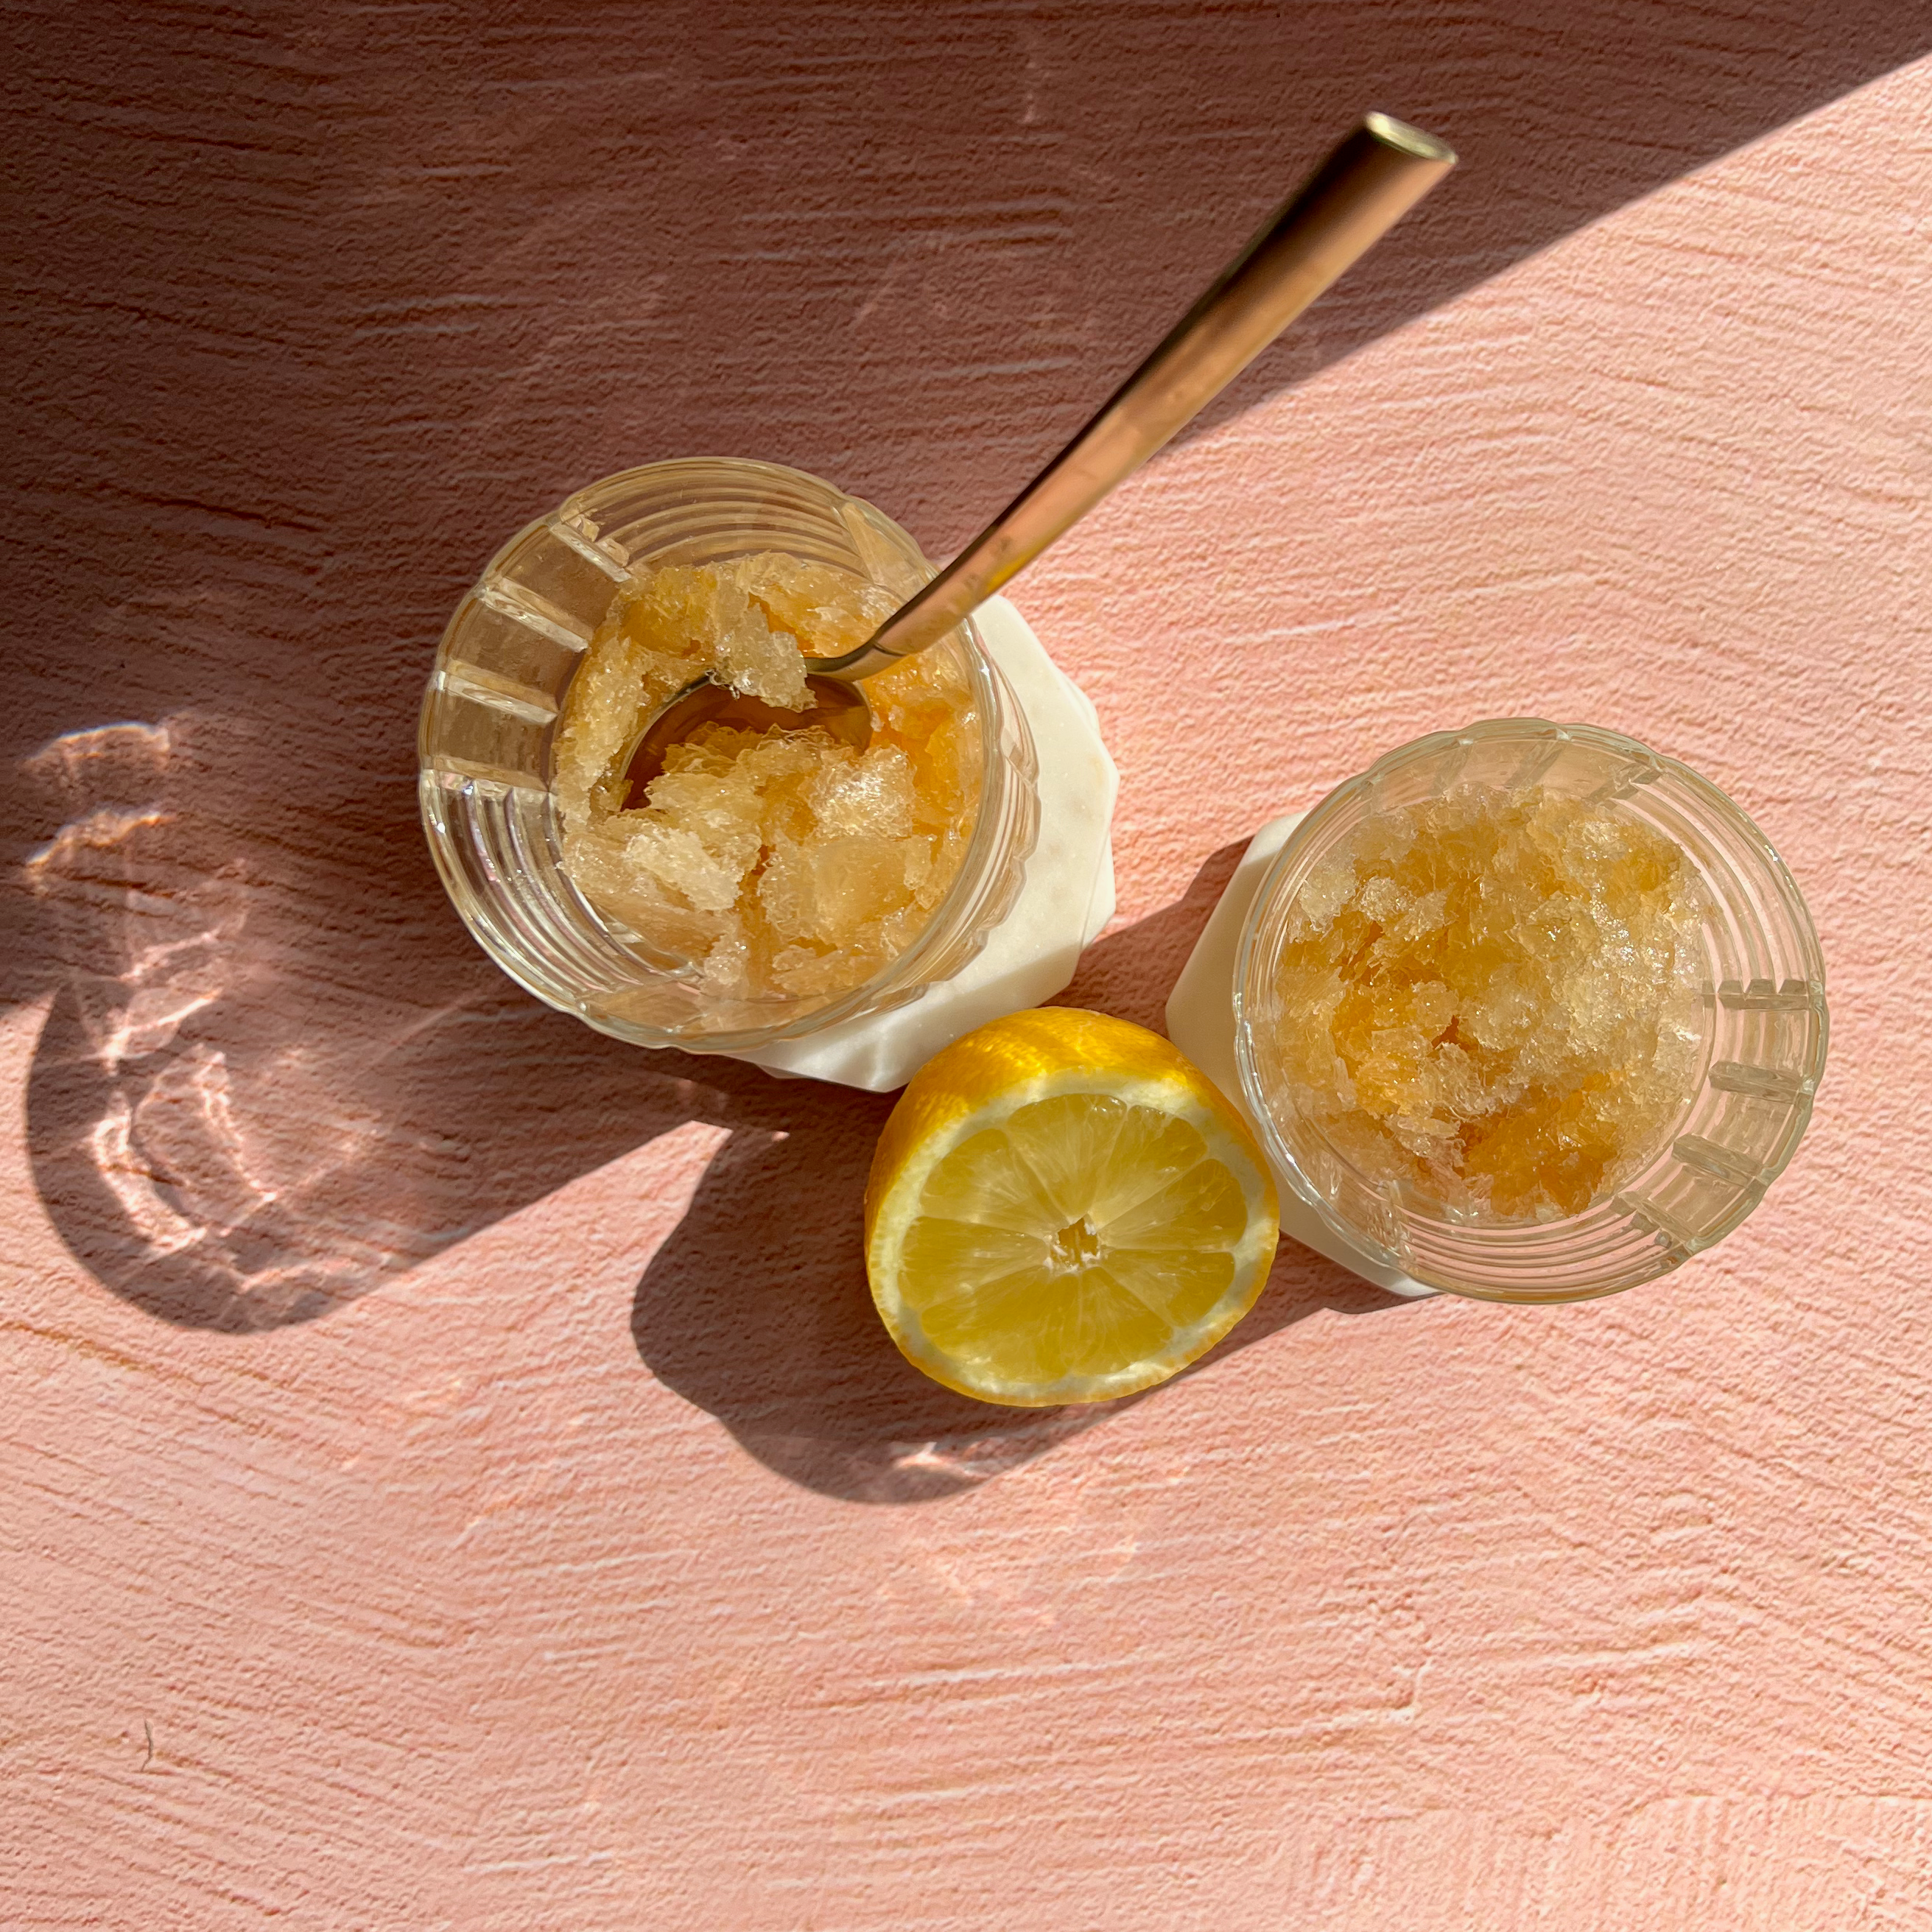 slushy iced tea lemonade cocktail in rocks glass with spoon and lemon half